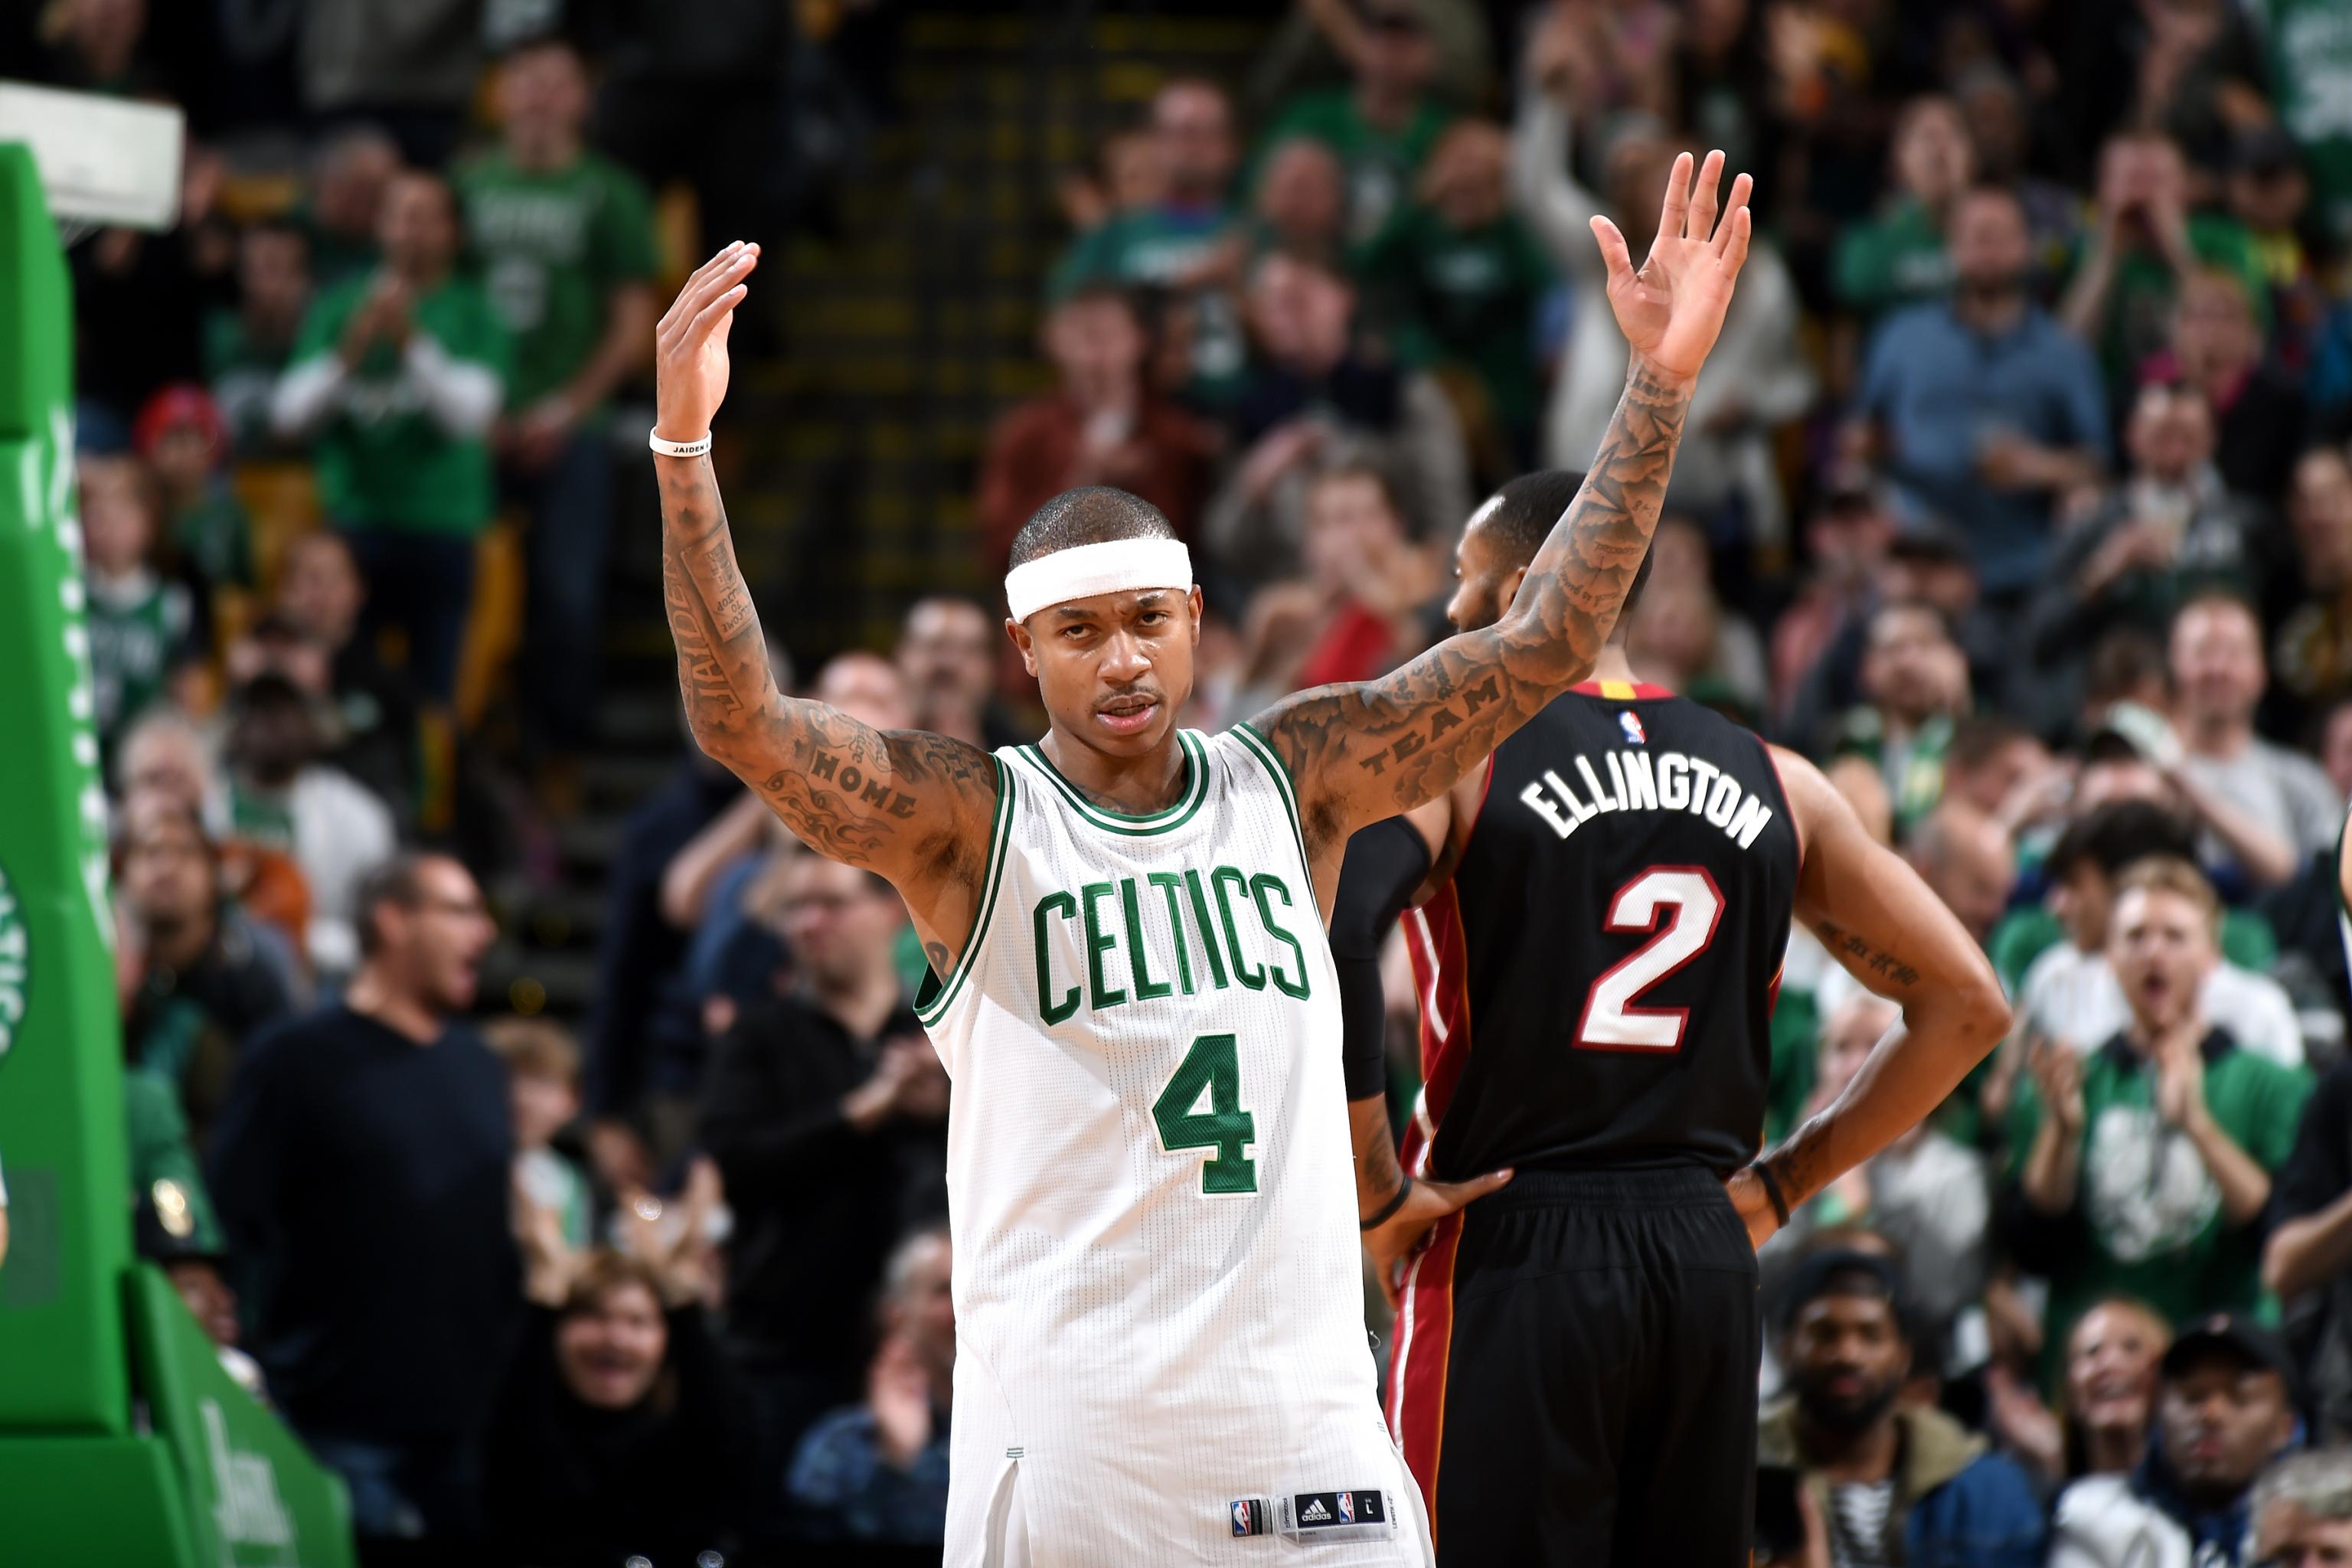 Isaiah Thomas leads Celtics yet again in fourth quarter